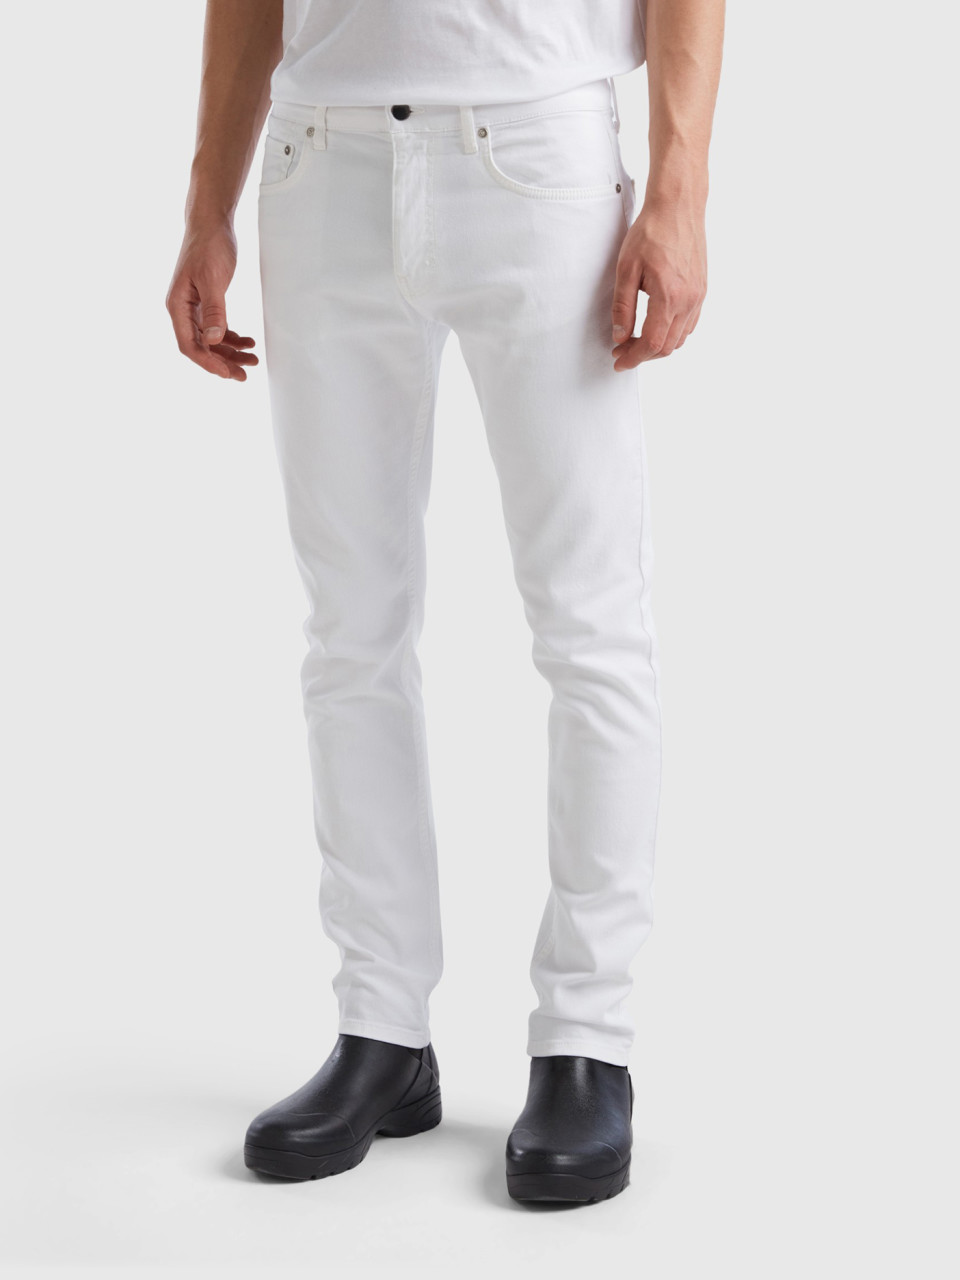 Benetton, Five Pocket Slim Fit Trousers, White, Men